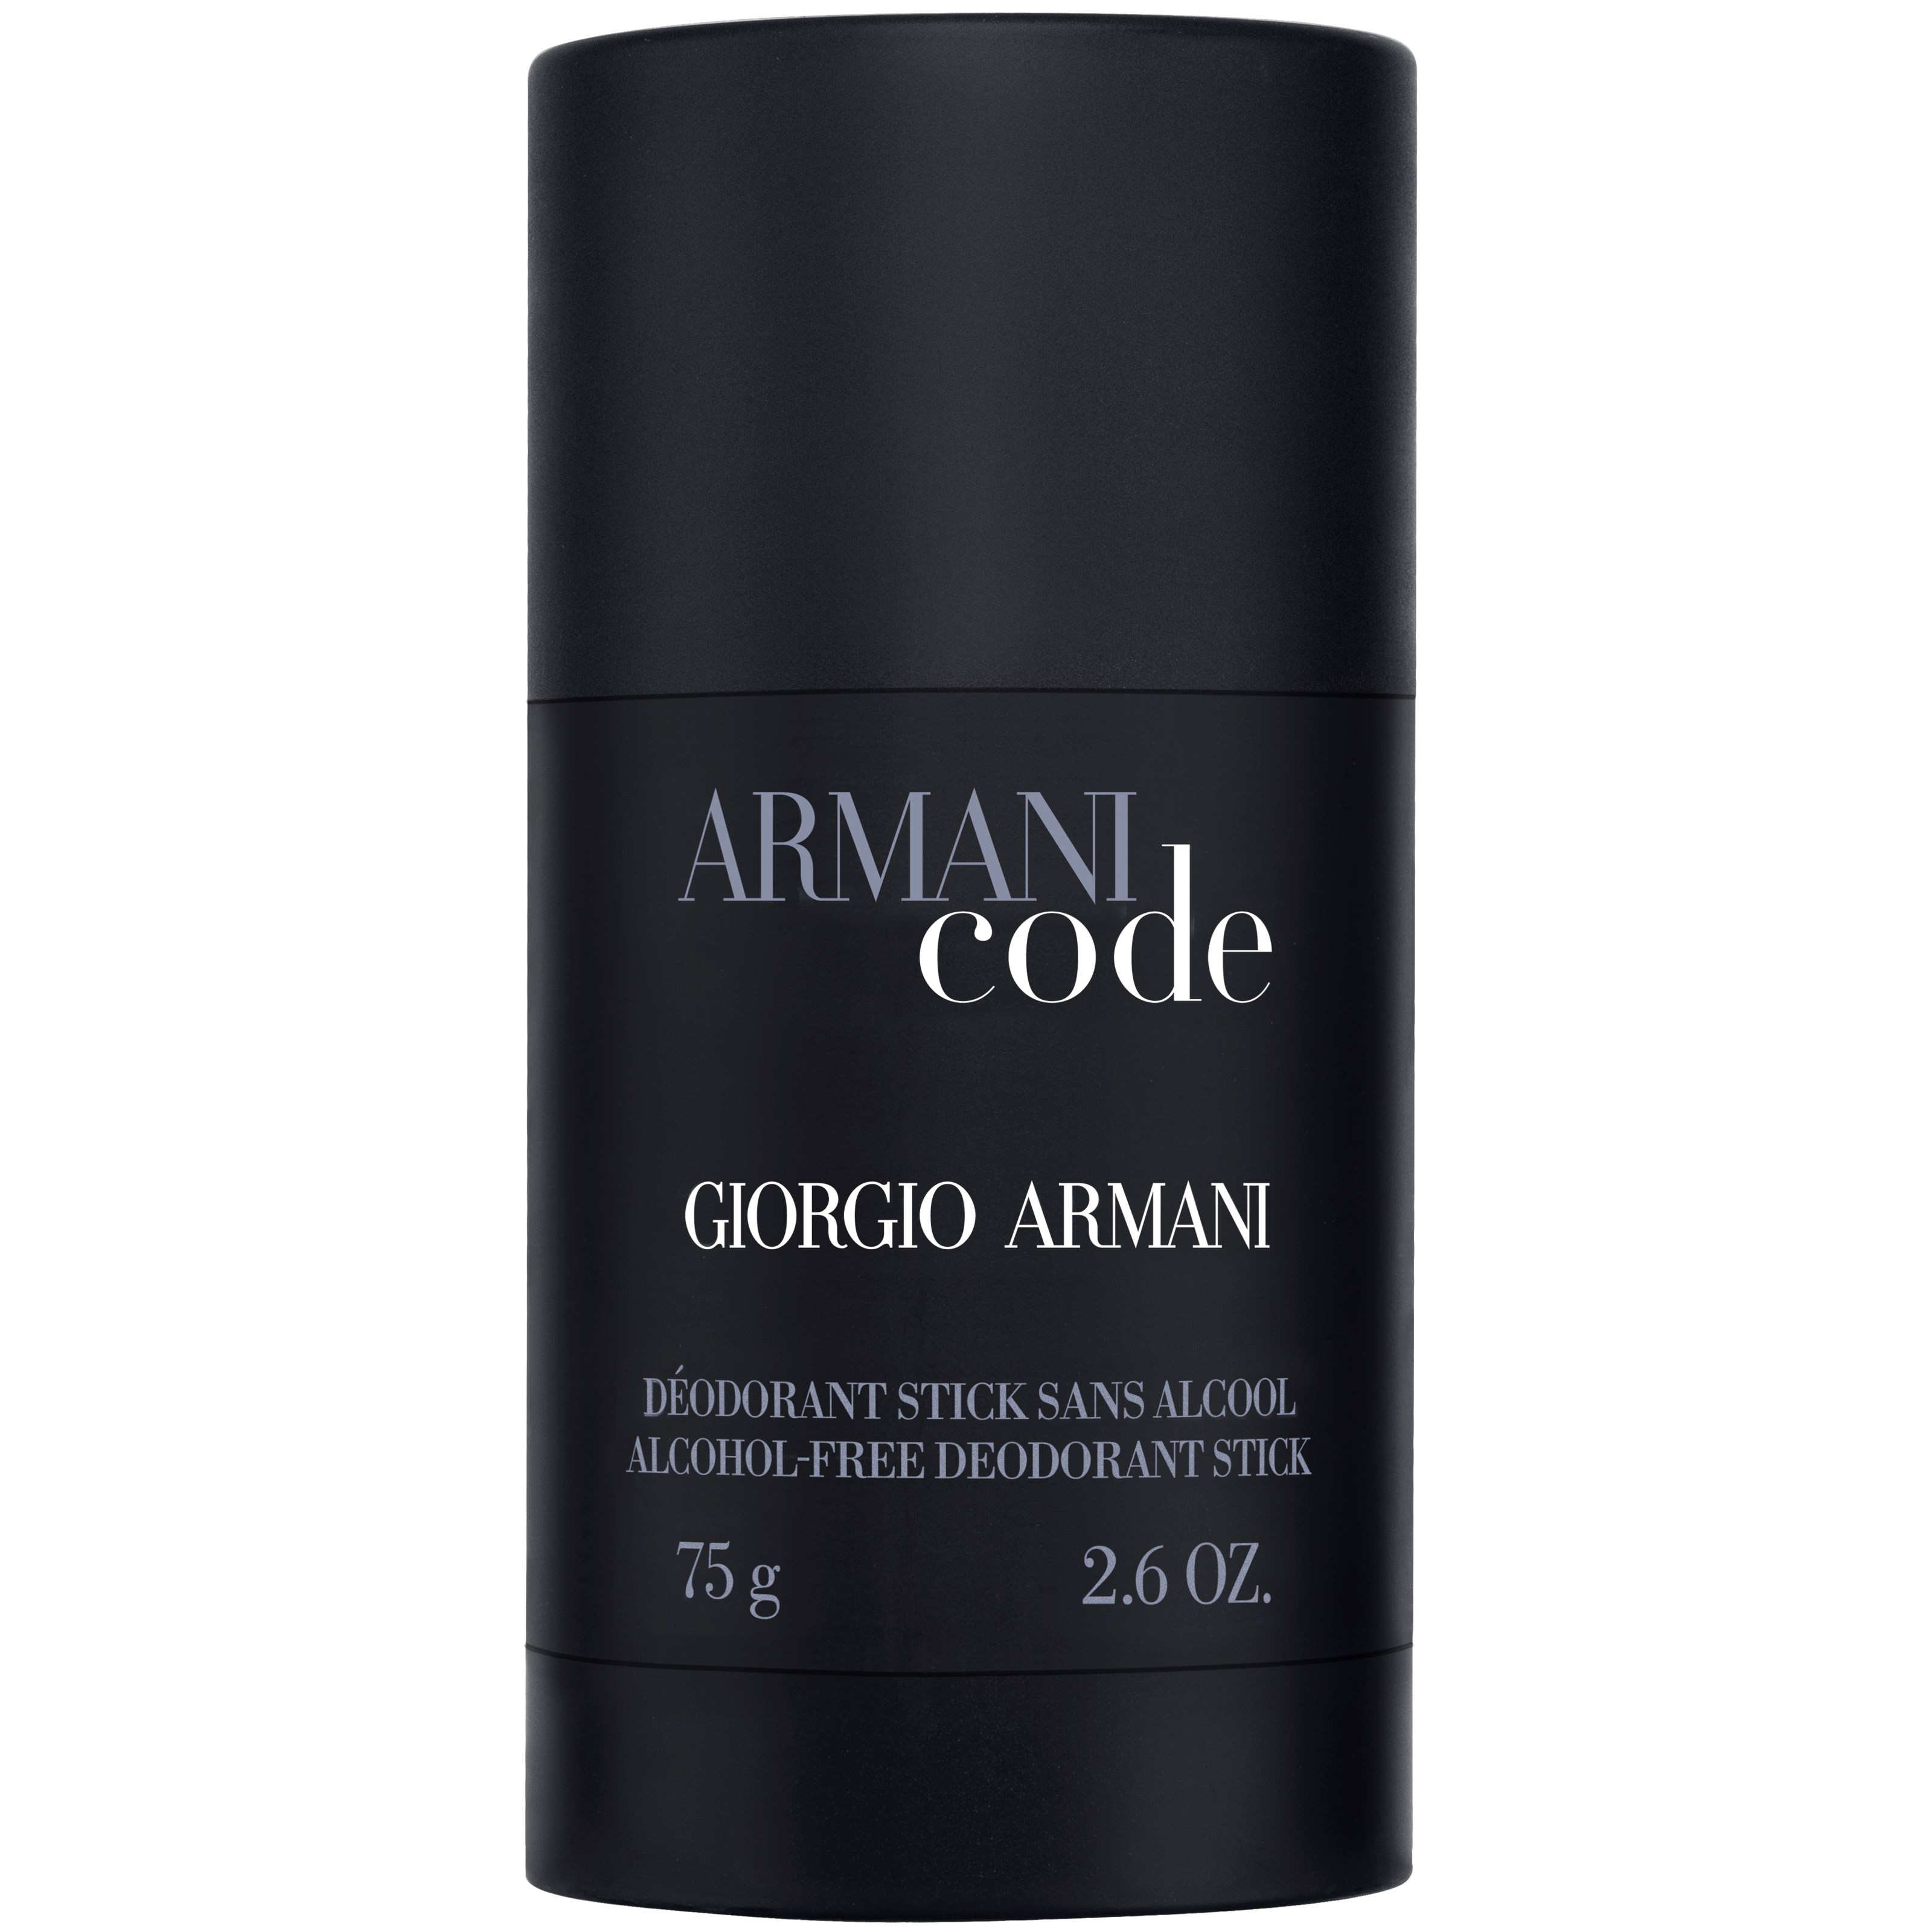 Armani Code Pour Homme Deostick 75ml